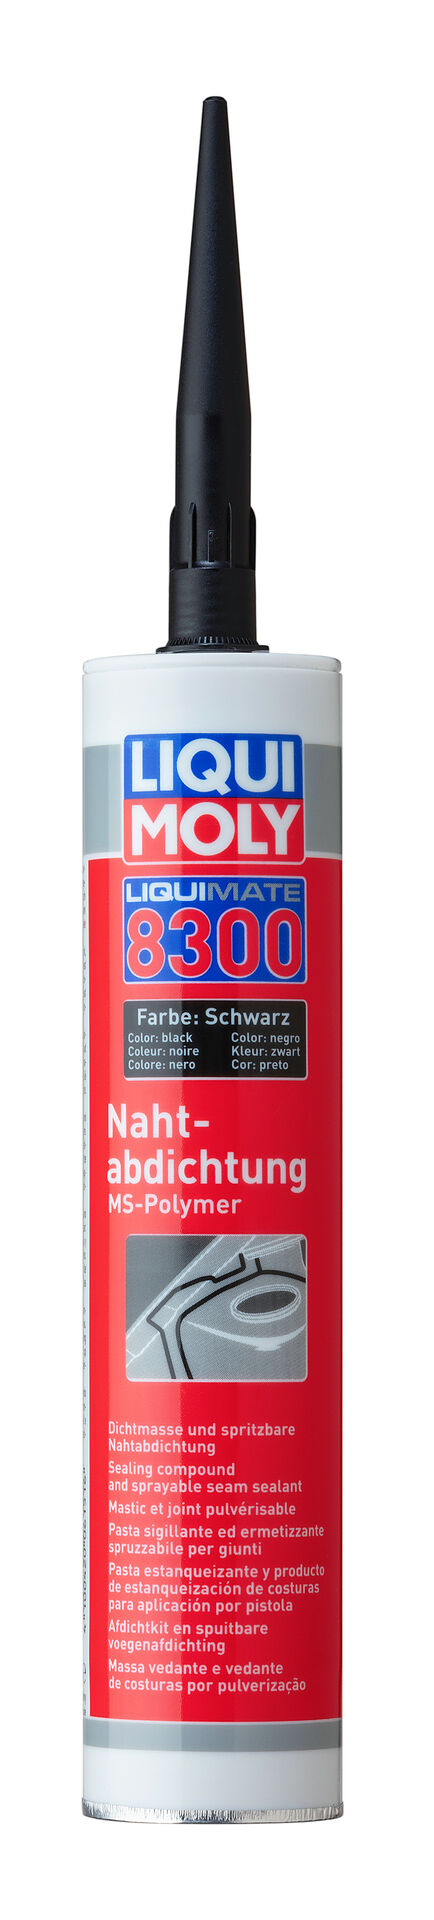 Liqui Moly Liquimate 8300 Nahtabdichtung schwarz MS-Polymer Dichtmasse 310 ml